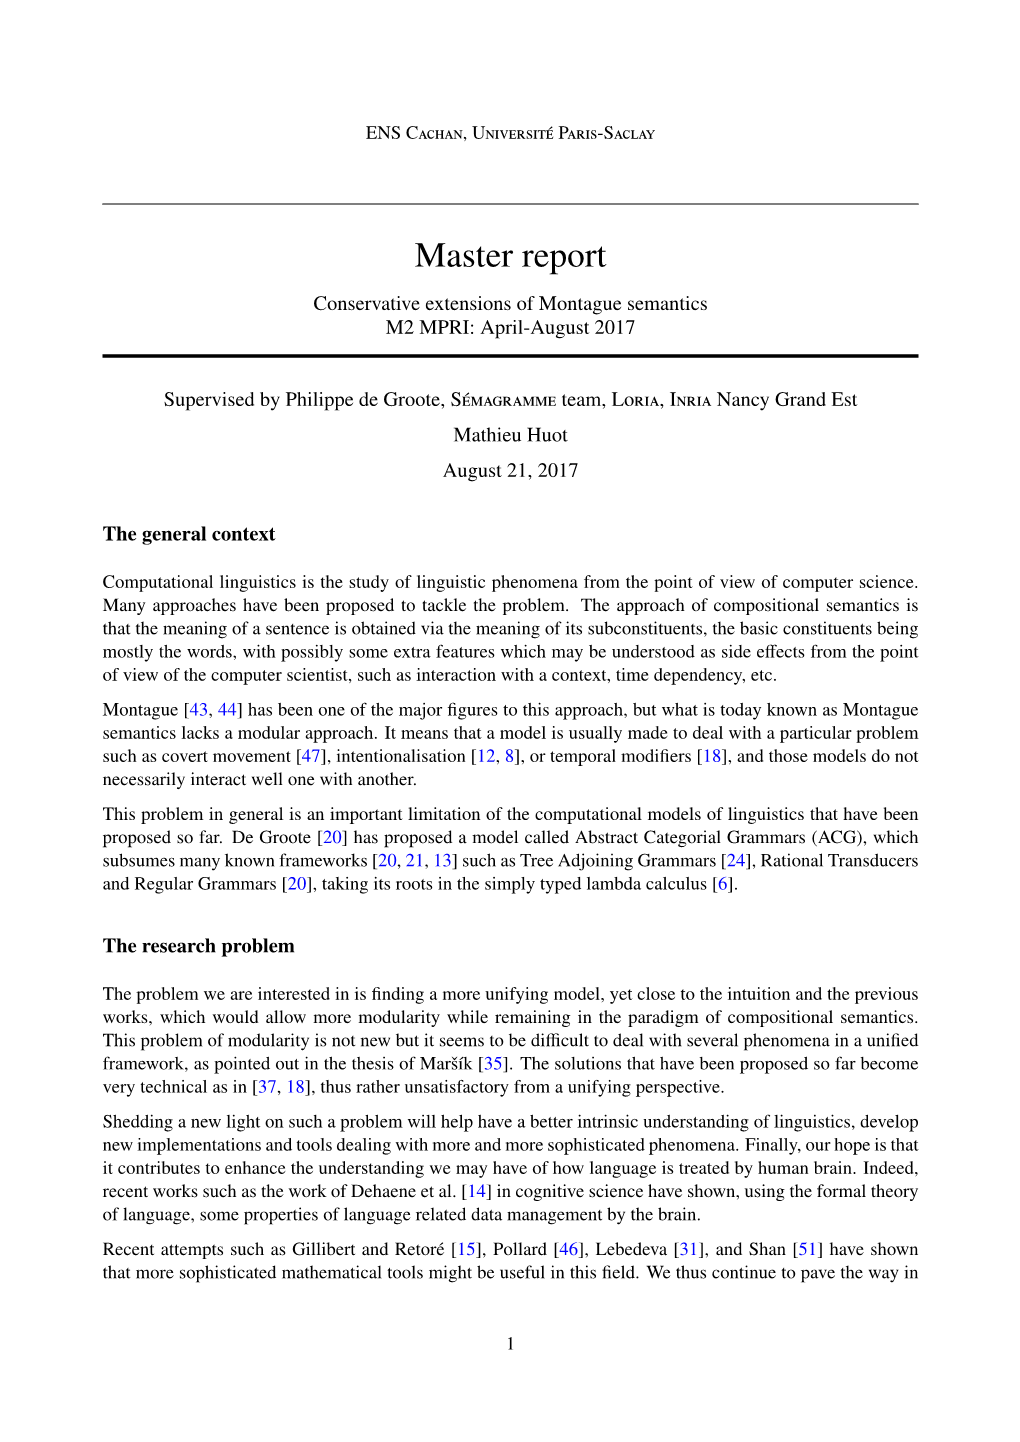 Master Report Conservative Extensions of Montague Semantics M2 MPRI: April-August 2017